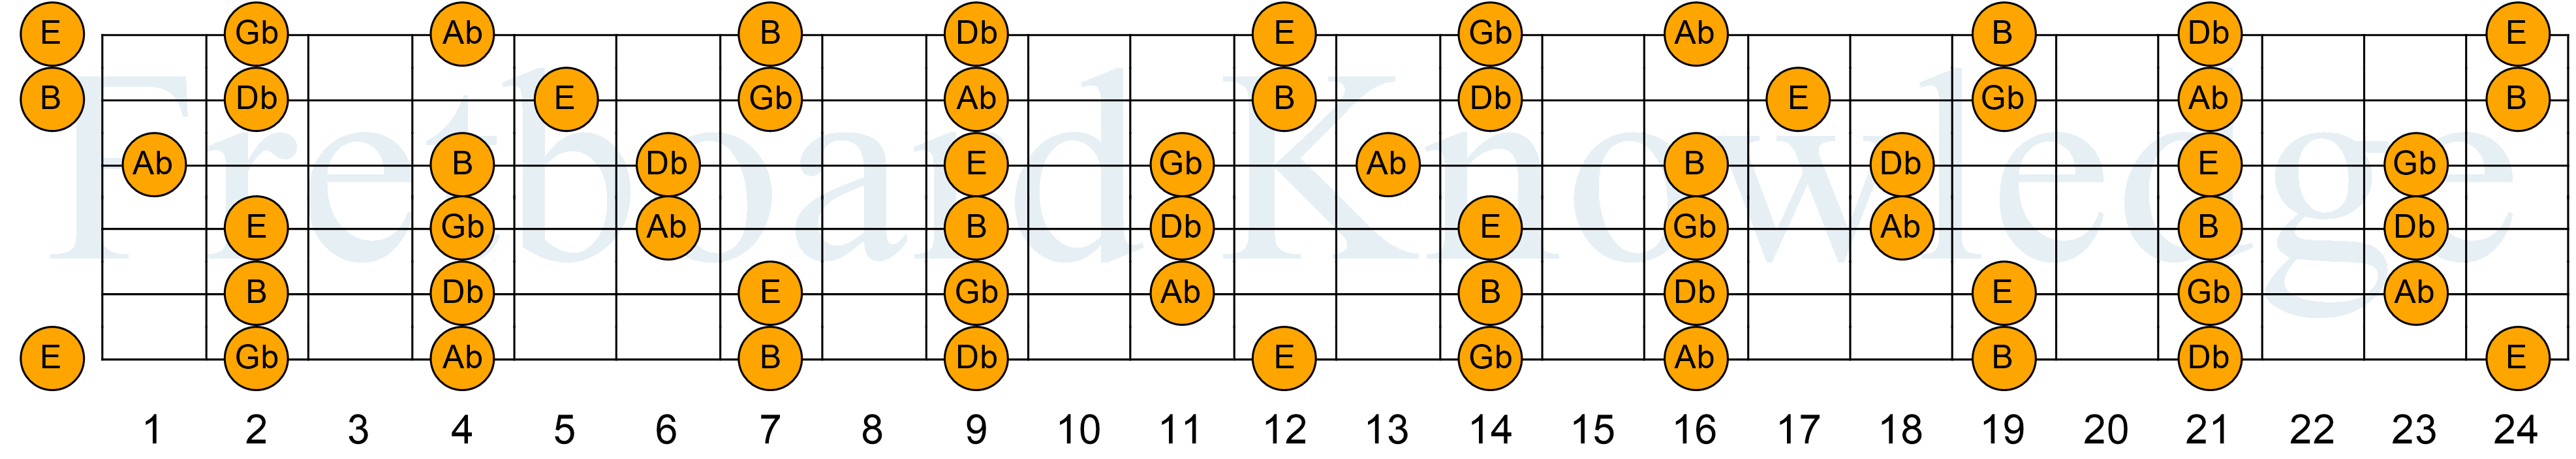 Dbm Pentatonic Guitar Fretboard Diagram